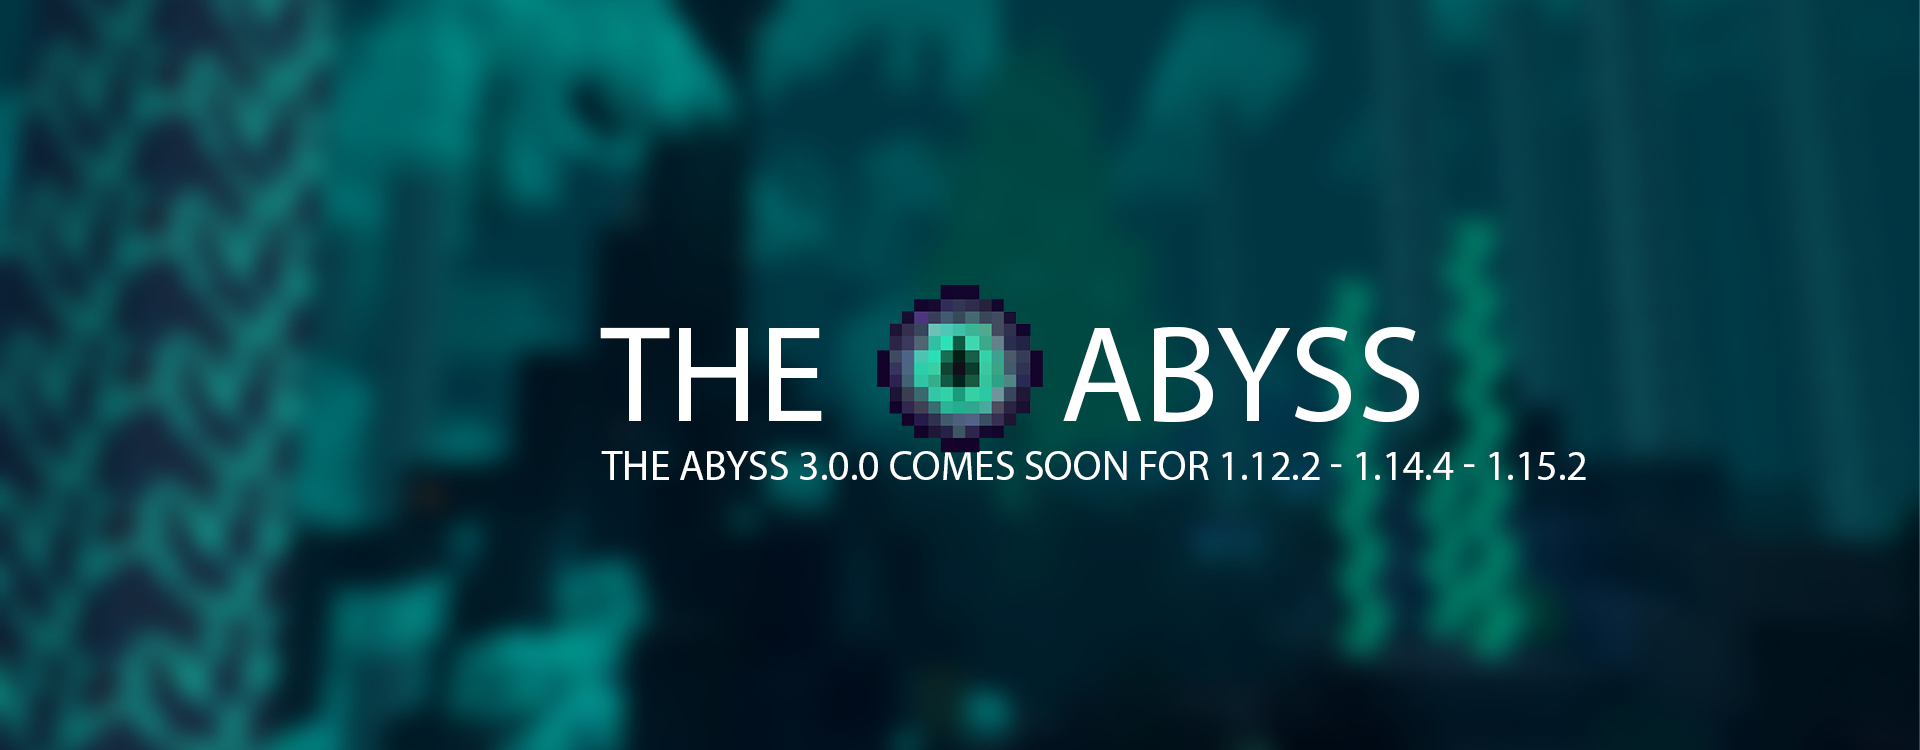 The Abуss Project [1.15.2] [1.14.4] [1.12.2] (новое измерение тьмы)